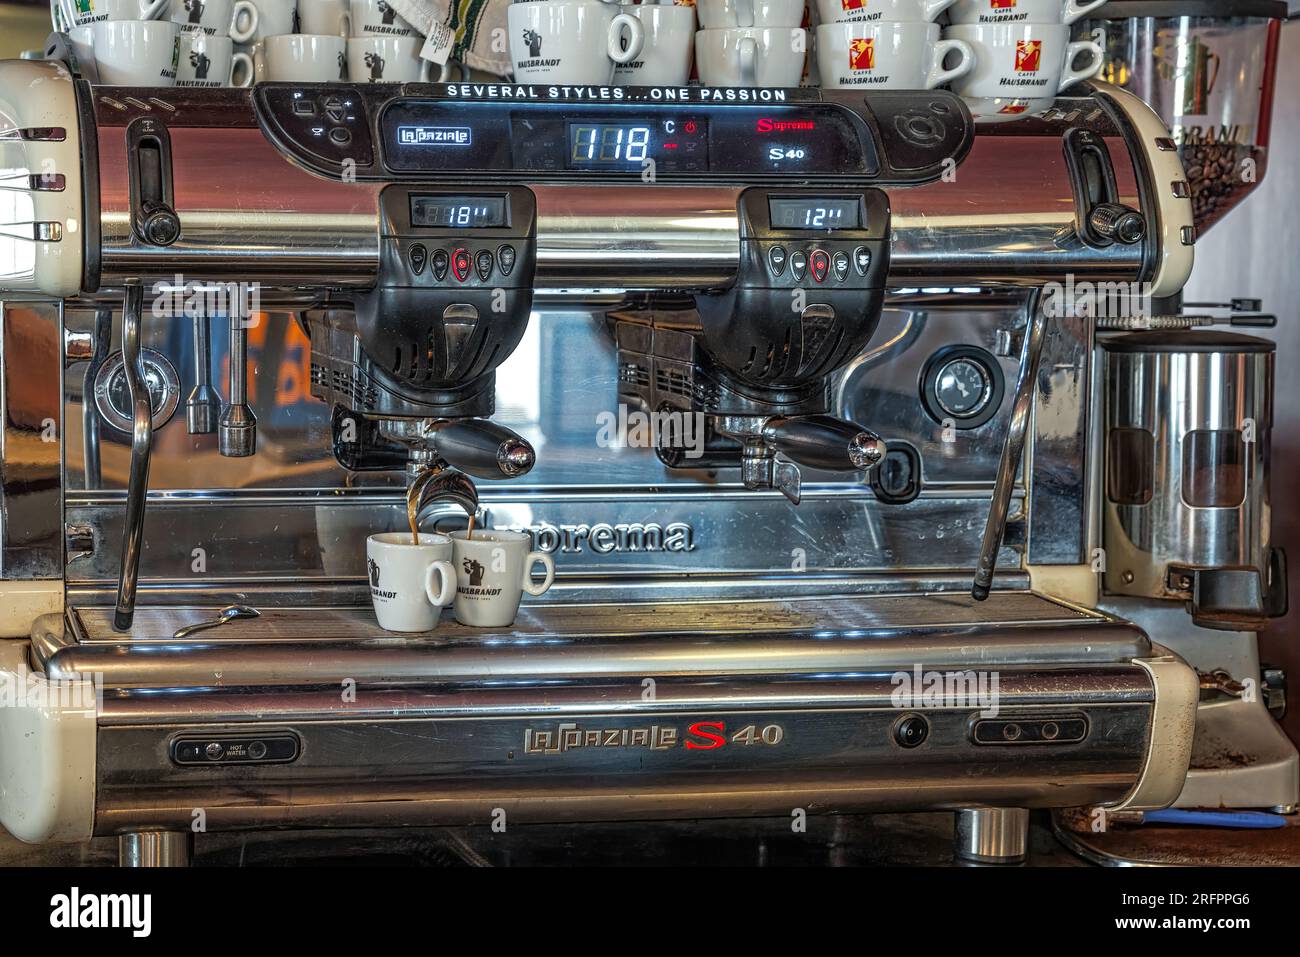 espresso machine makingv two coffee cups in a bar, Italy Stock Photo